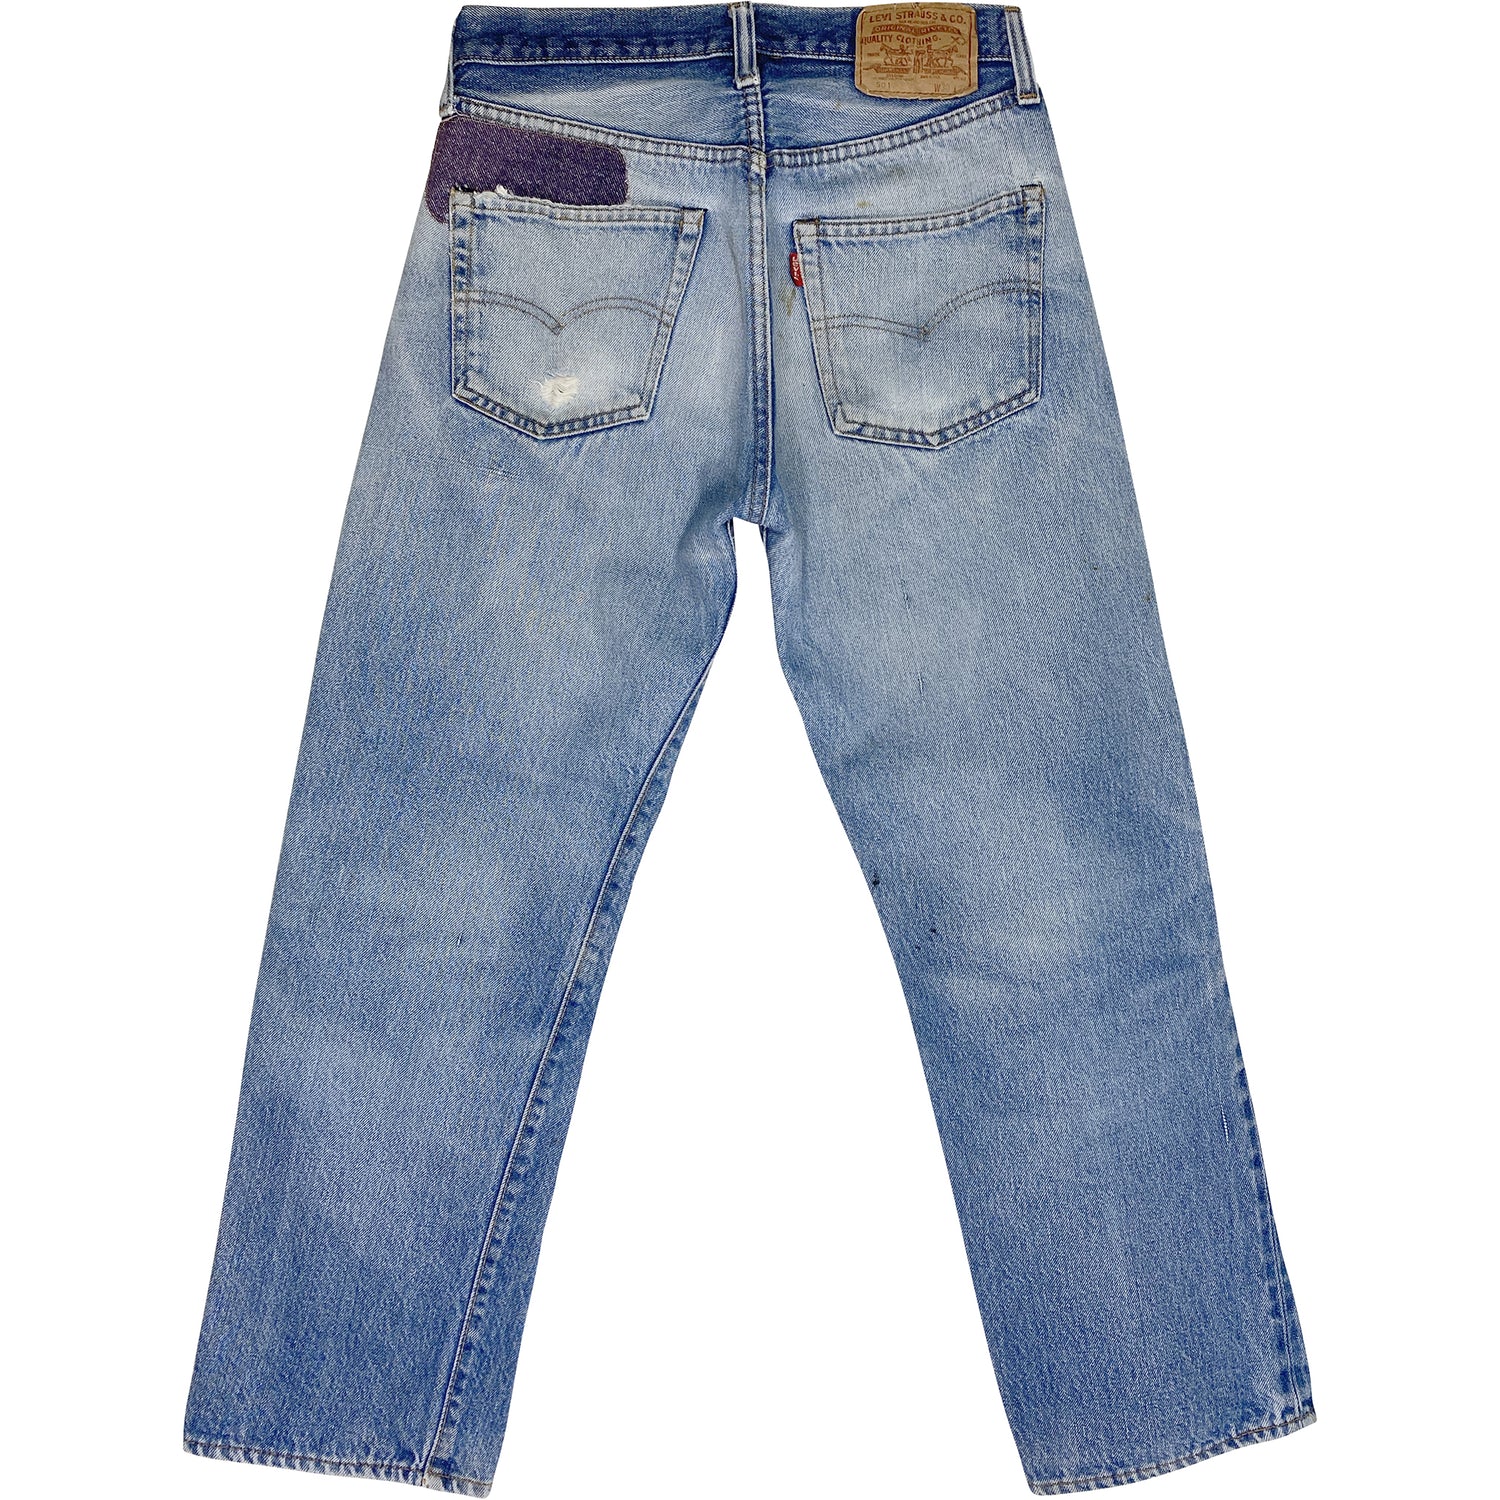 Vintage Levi's 501 Jeans, Size Small